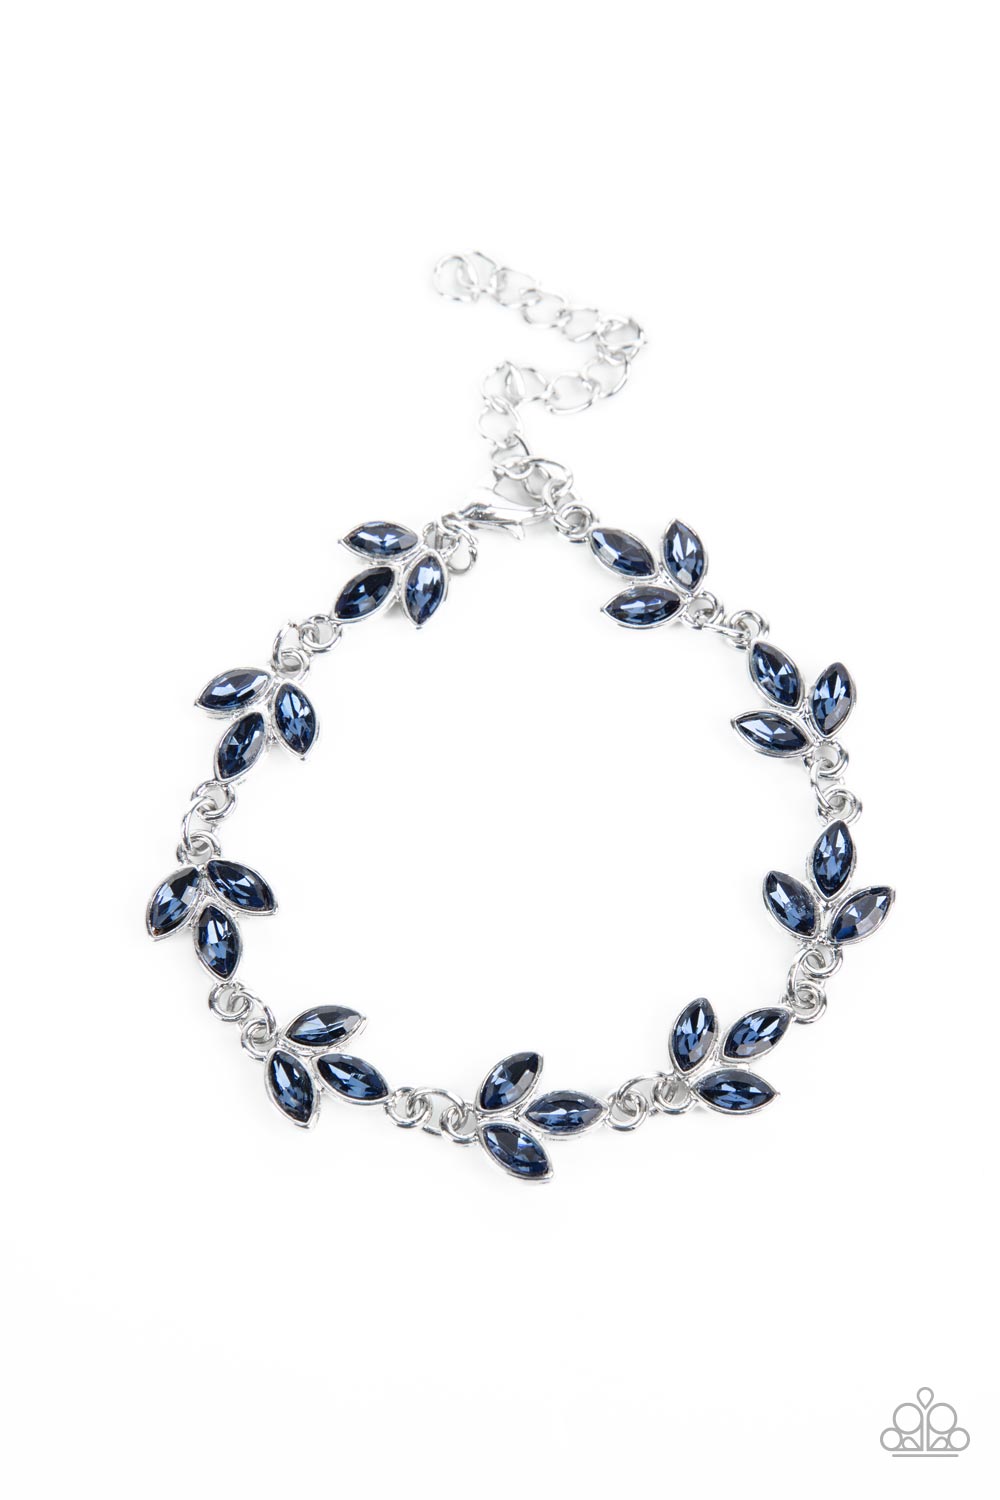 Gala Garland - Blue Rhinestone Bracelet